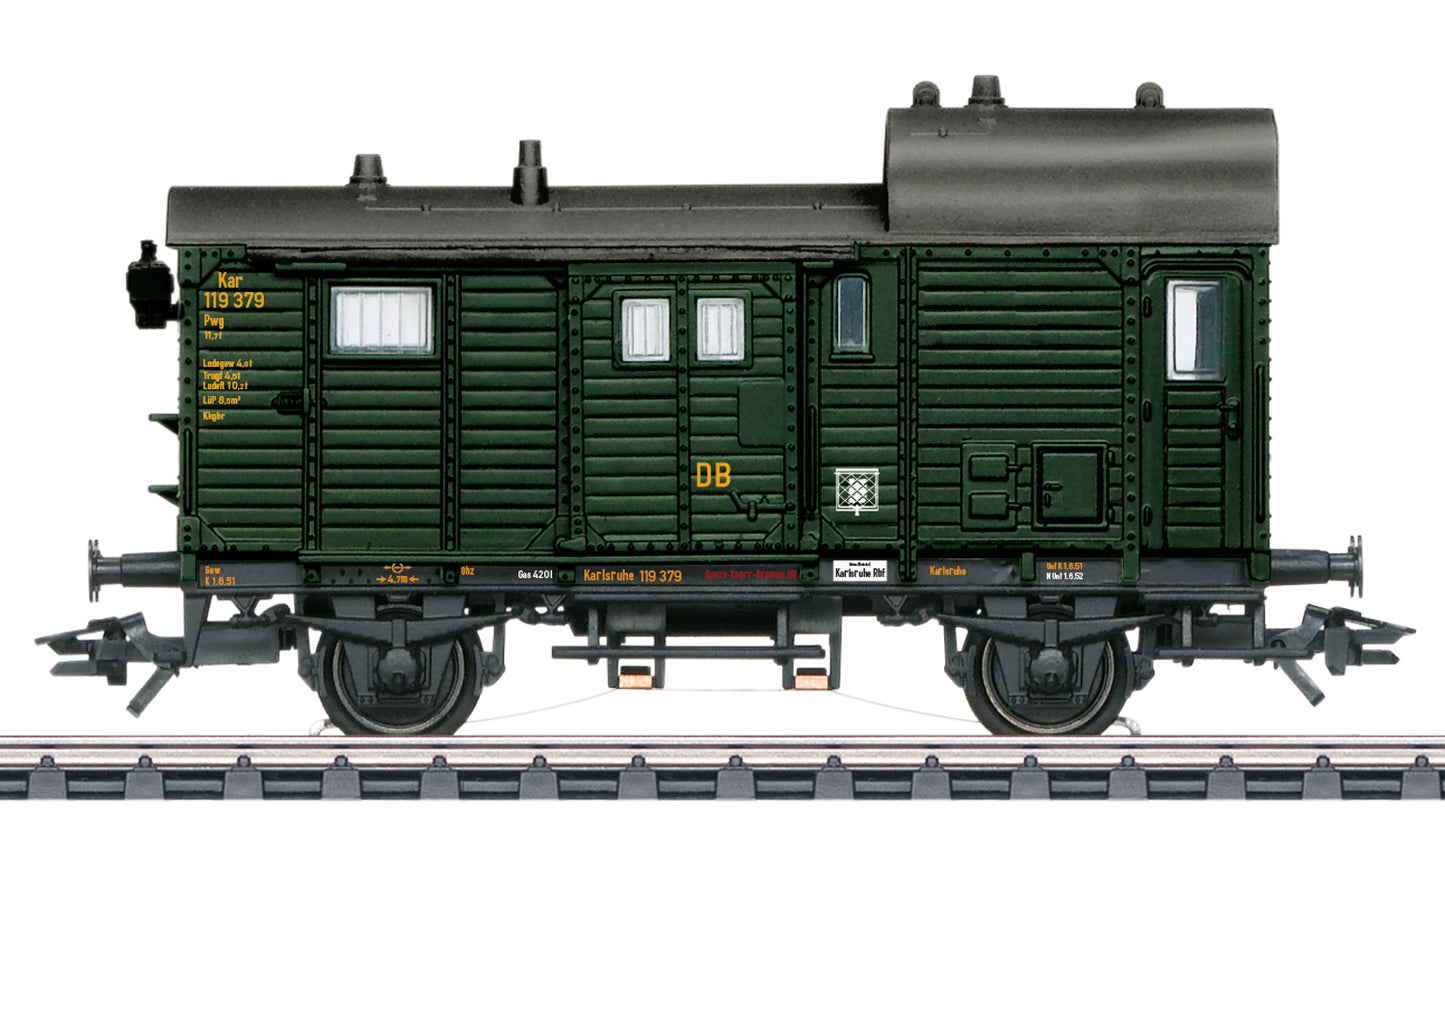 Marklin 46986 - Type Pwg Pr 14 Freight Train Baggage Car (Sounds)